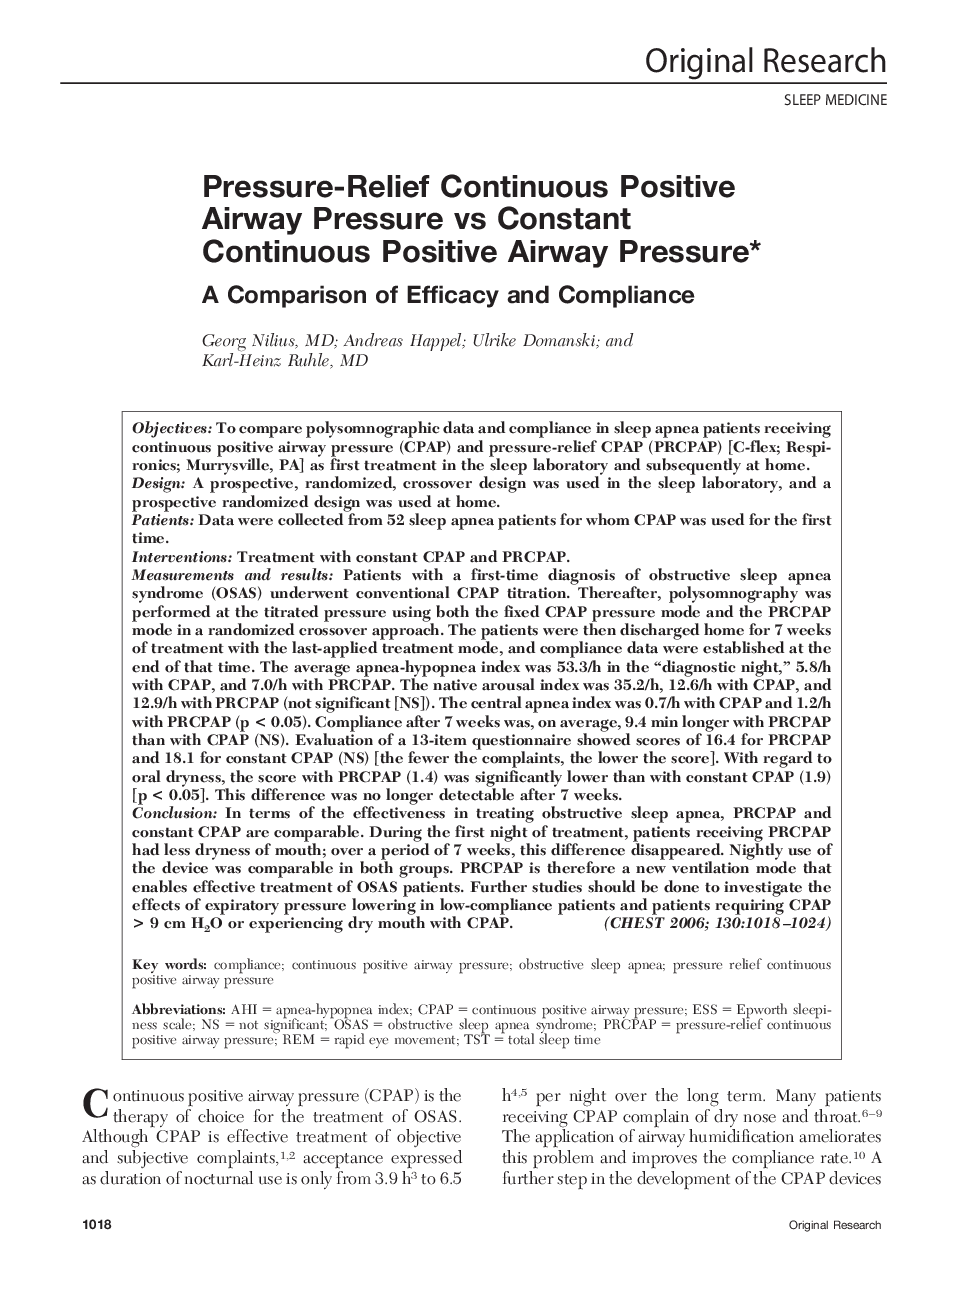 Pressure-Relief Continuous Positive Airway Pressure vs Constant Continuous Positive Airway Pressure